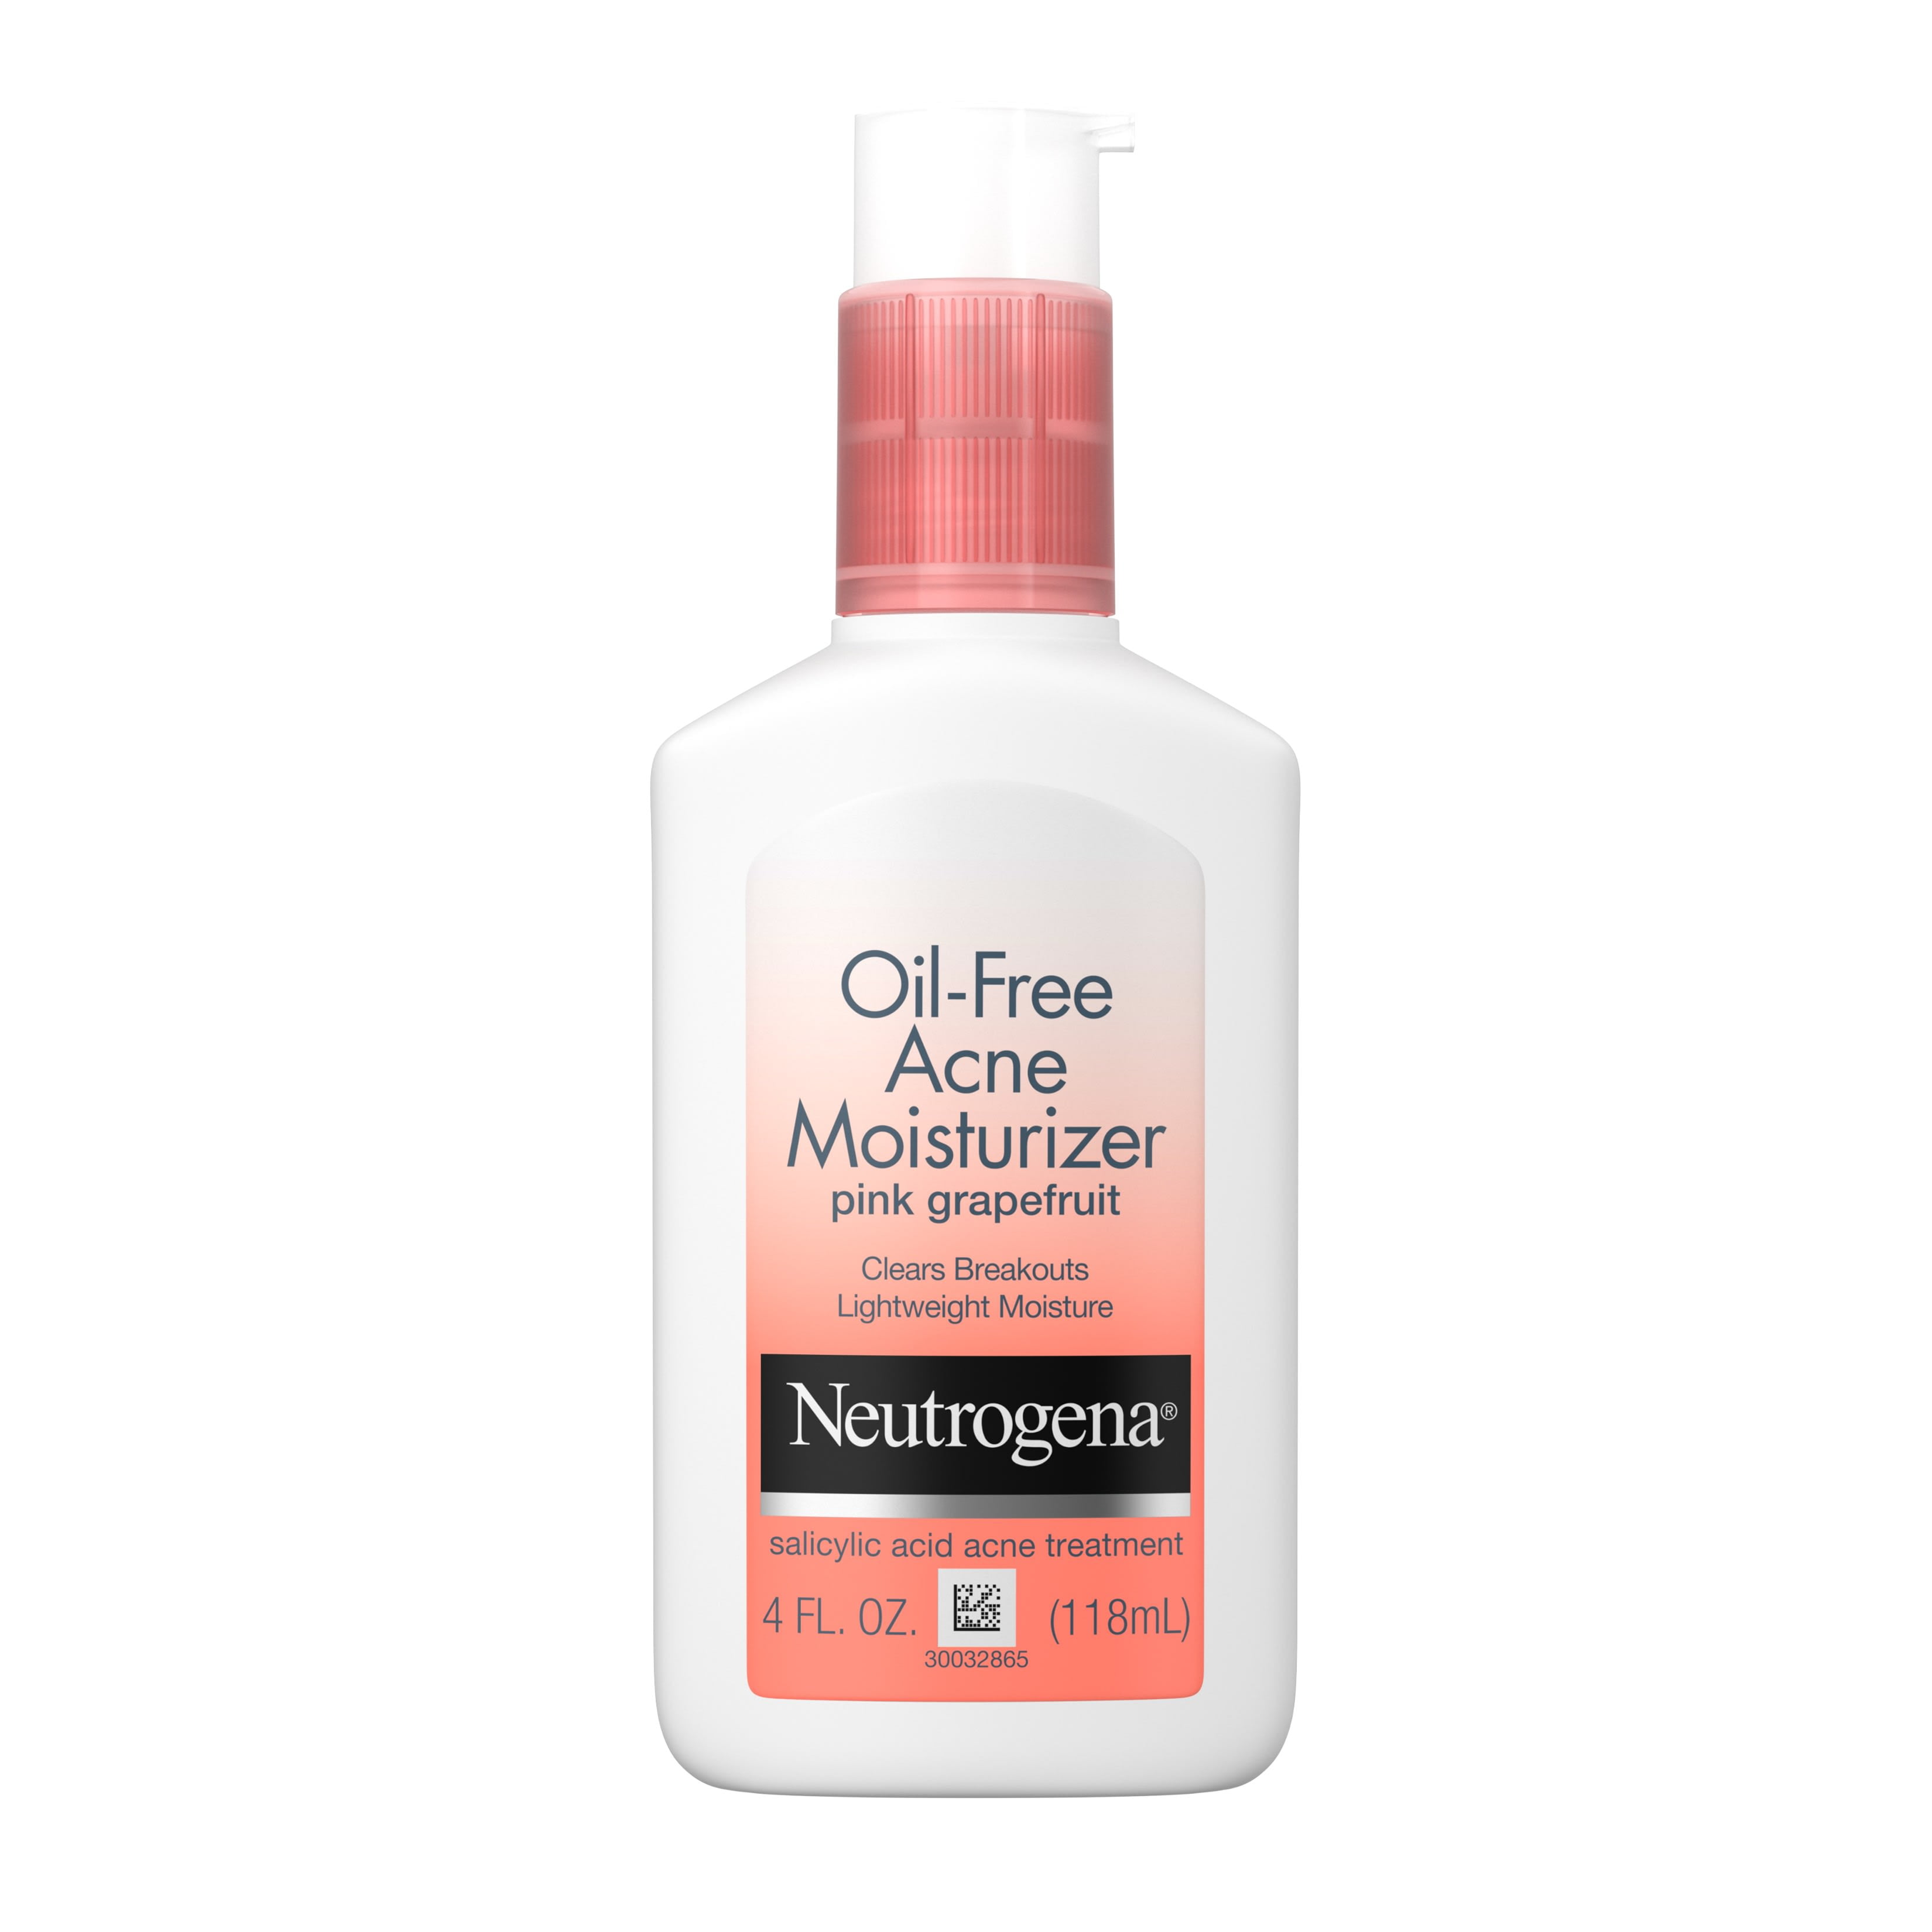 Neutrogena Oil-Free Acne Pink Grapefruit Facial Moisturizer, 4 fl oz